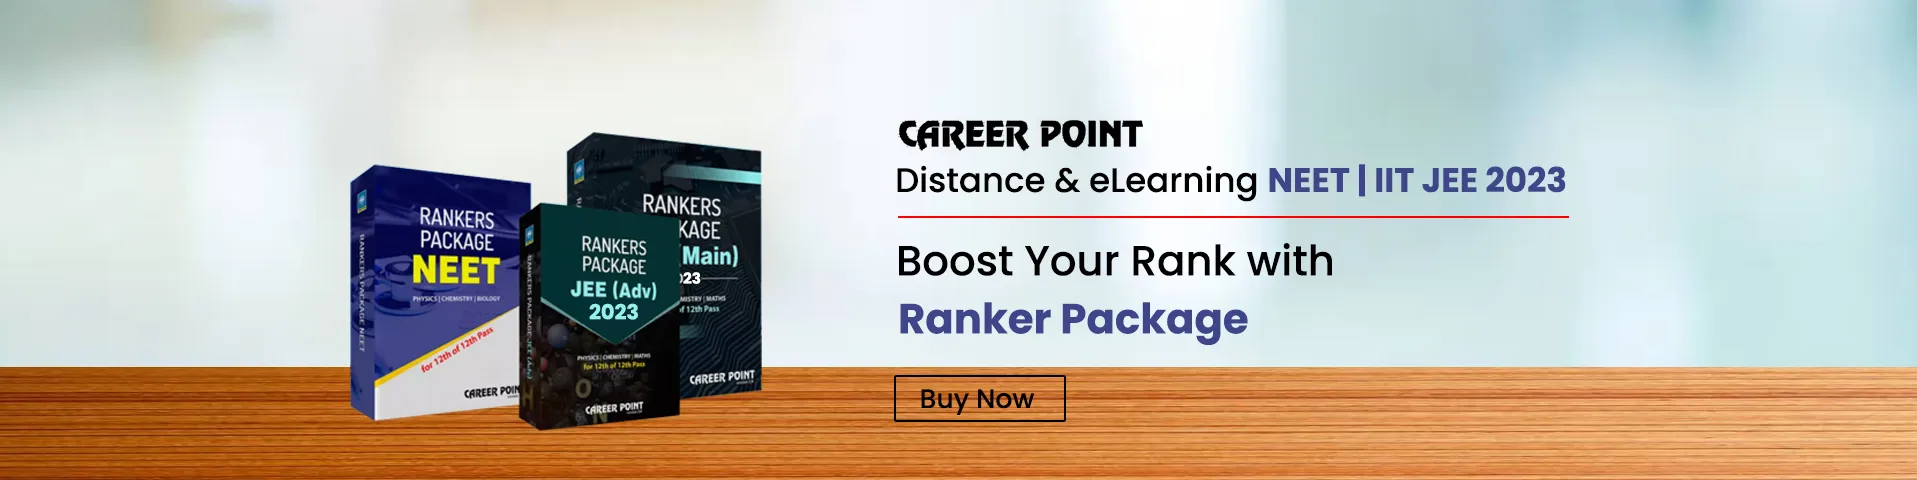 DLP Career Point Ranker Package 2023